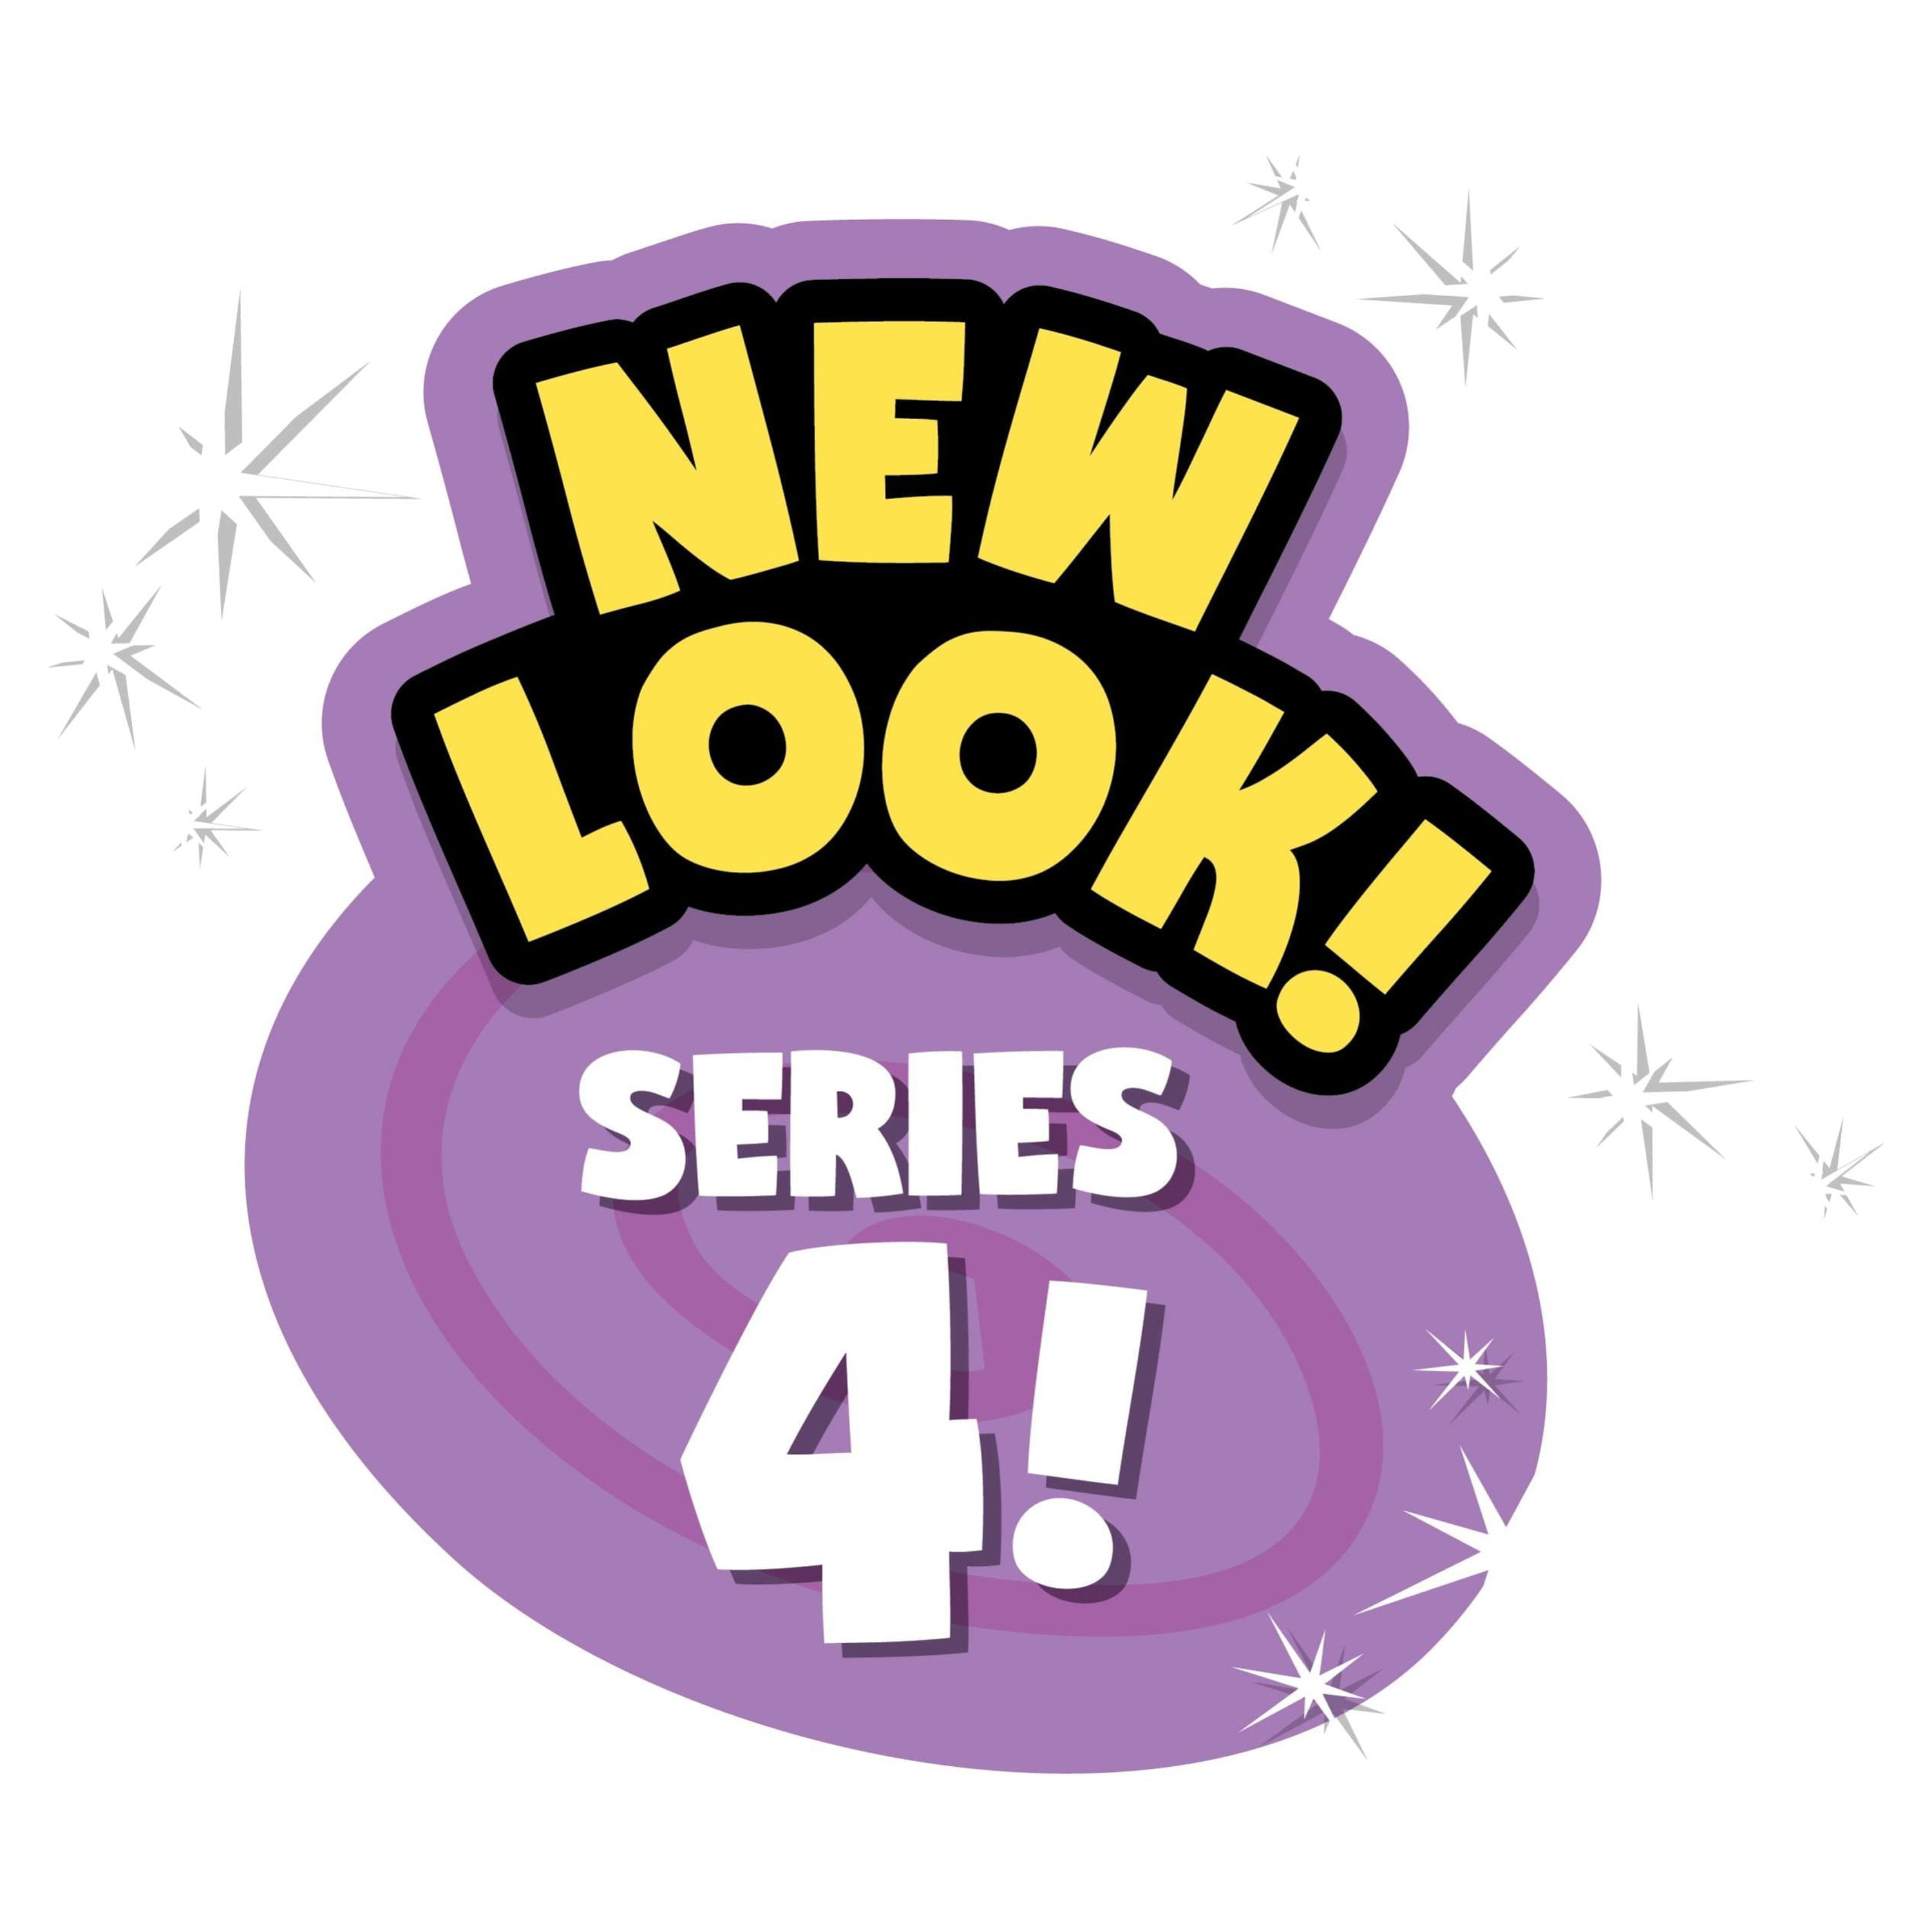 Disney Doorable series 4 mini peek (2-3 figures per box)